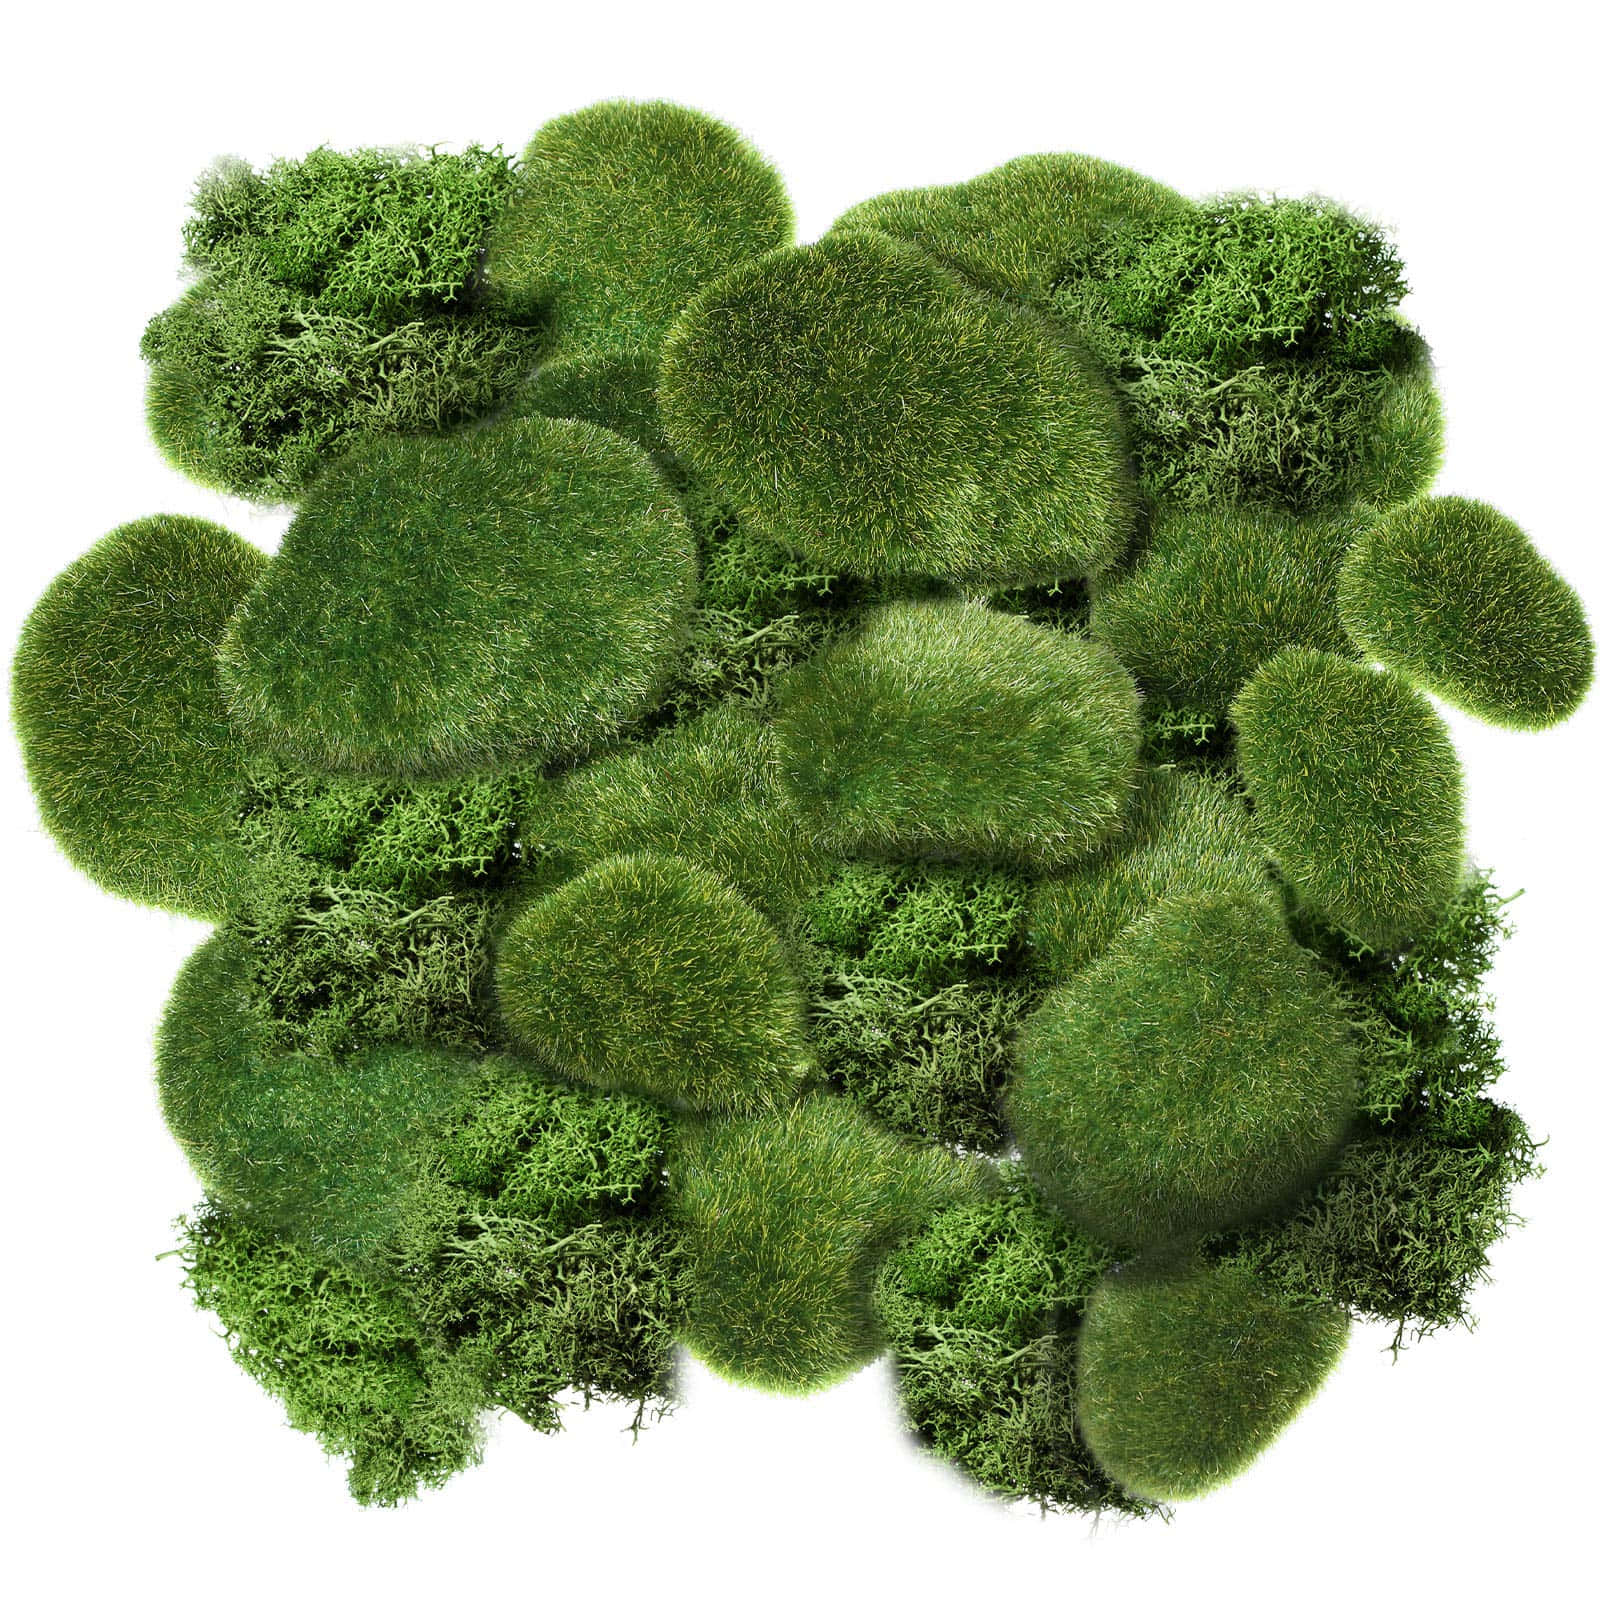 Lush Green Moss in its Natural Habitat Wallpaper